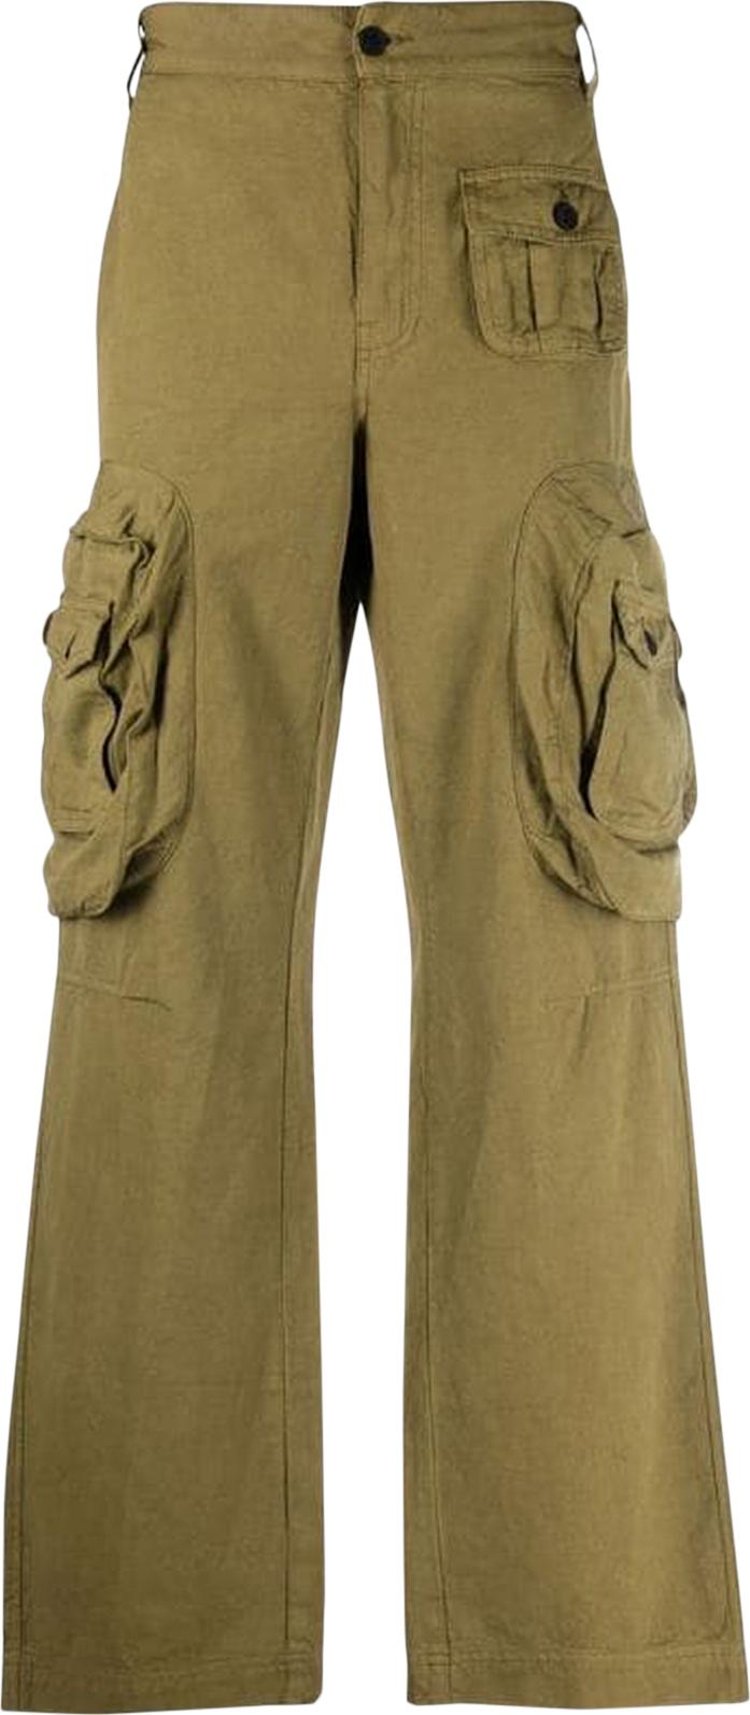 Heron Preston Pocket Cargo Pants 'Military Green'